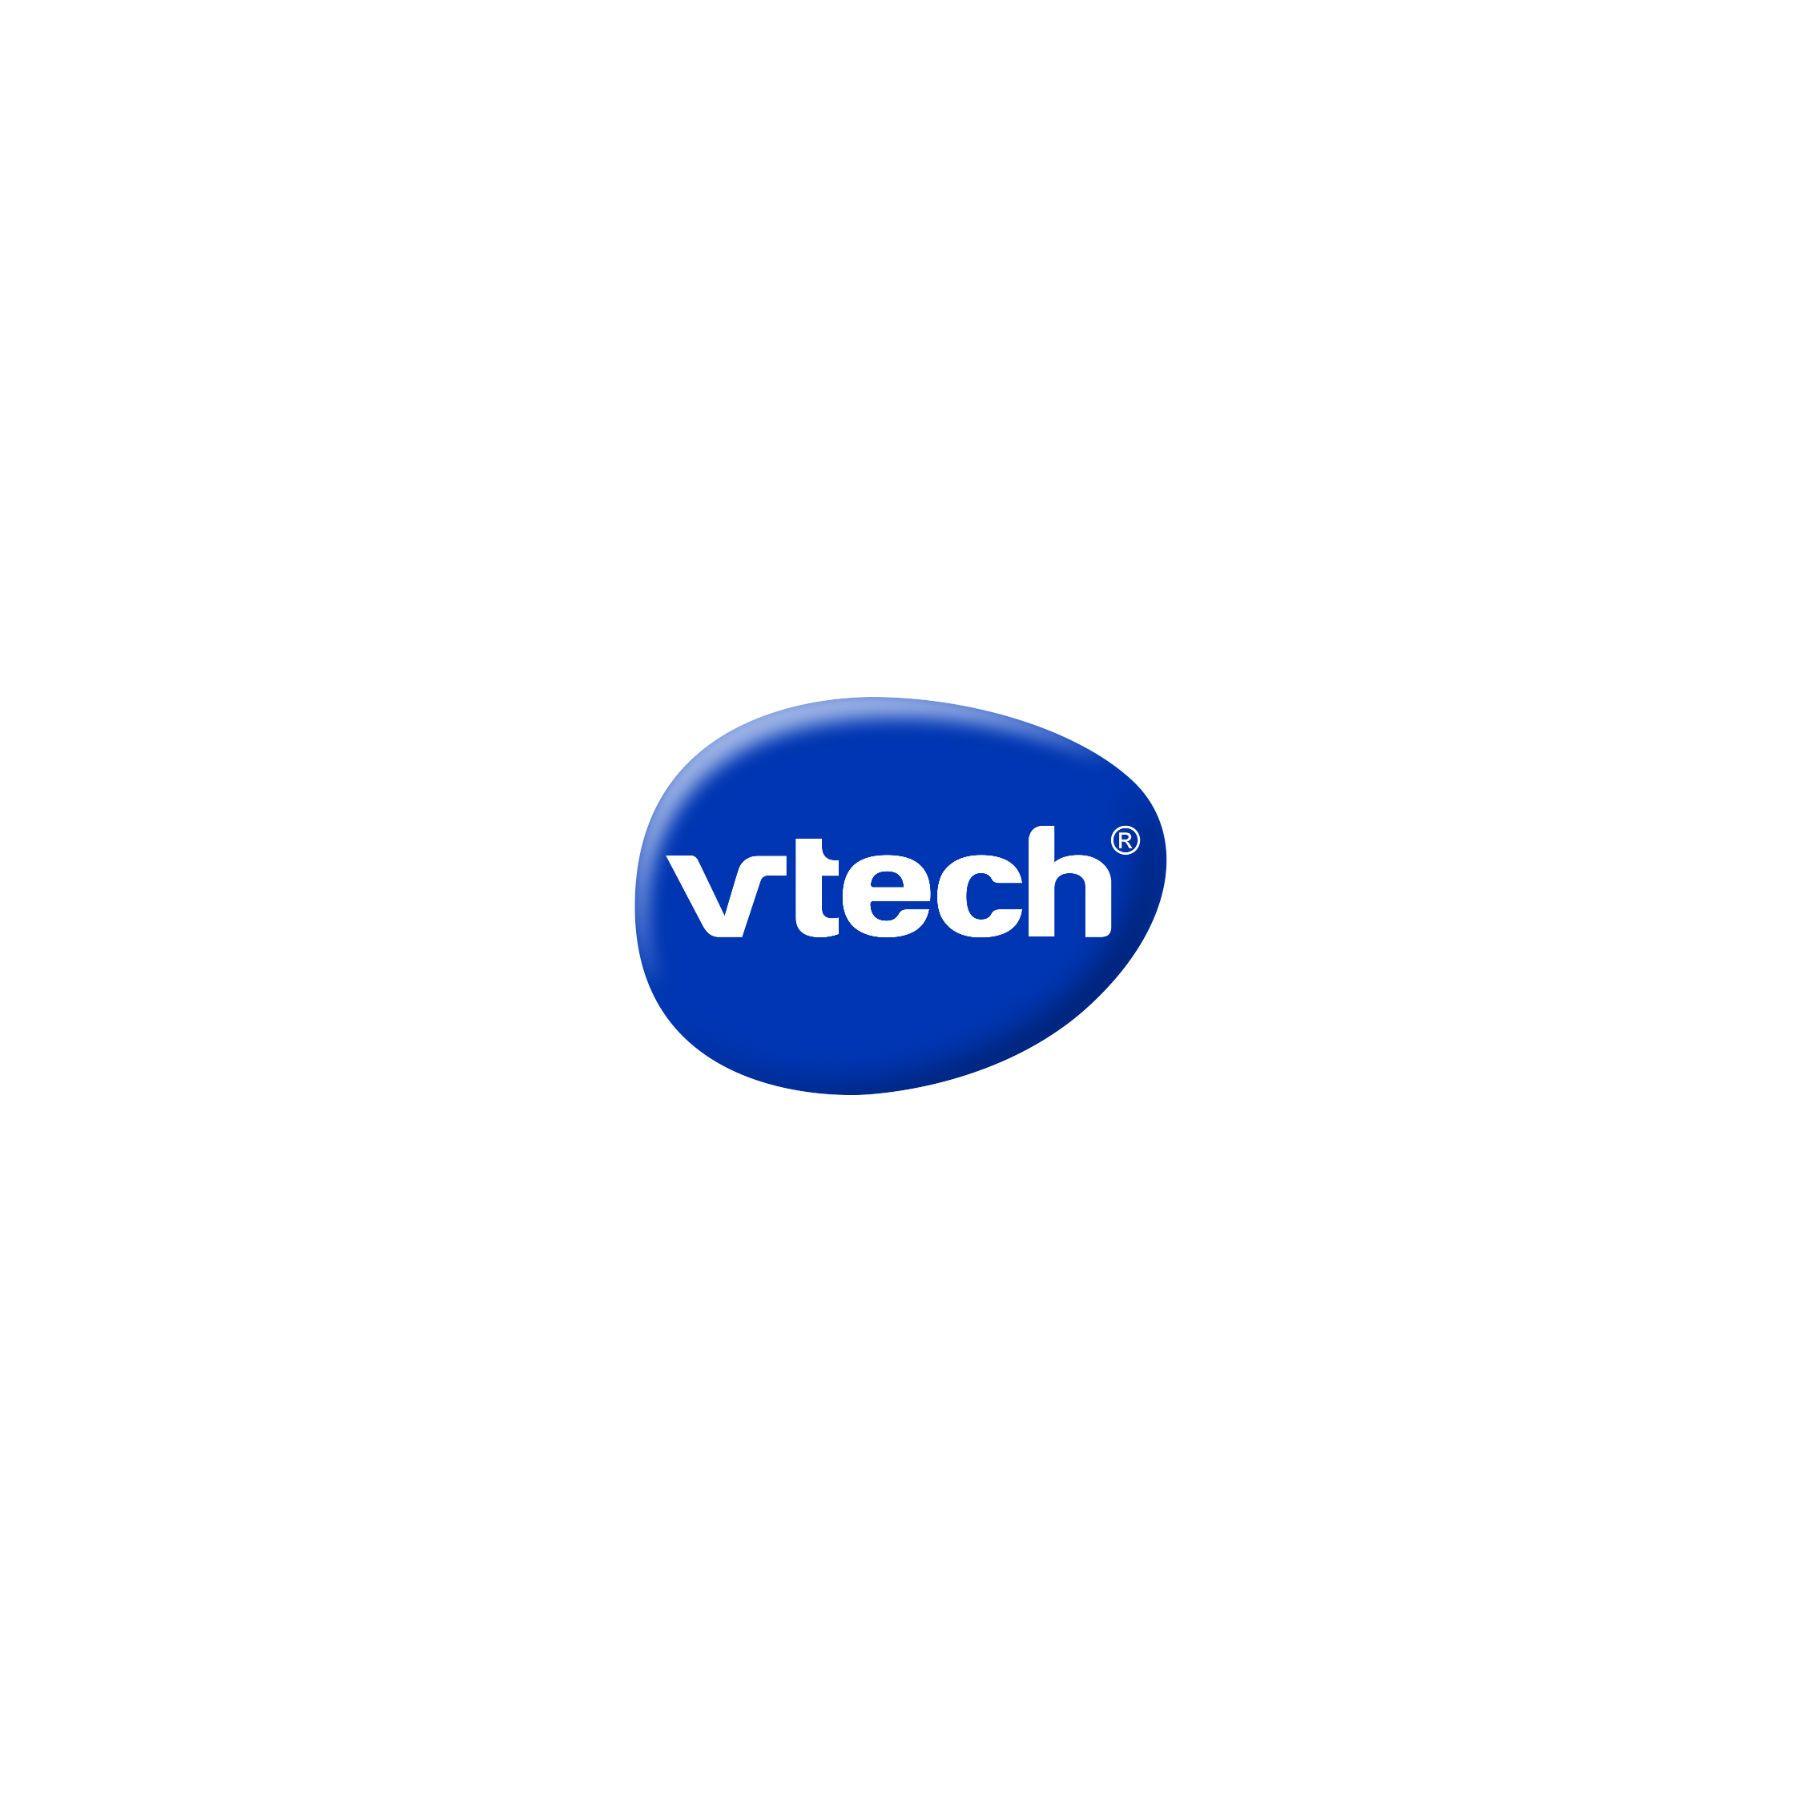 VTech Logo - Dons Solidaires : Donner, Distribuer, Partager